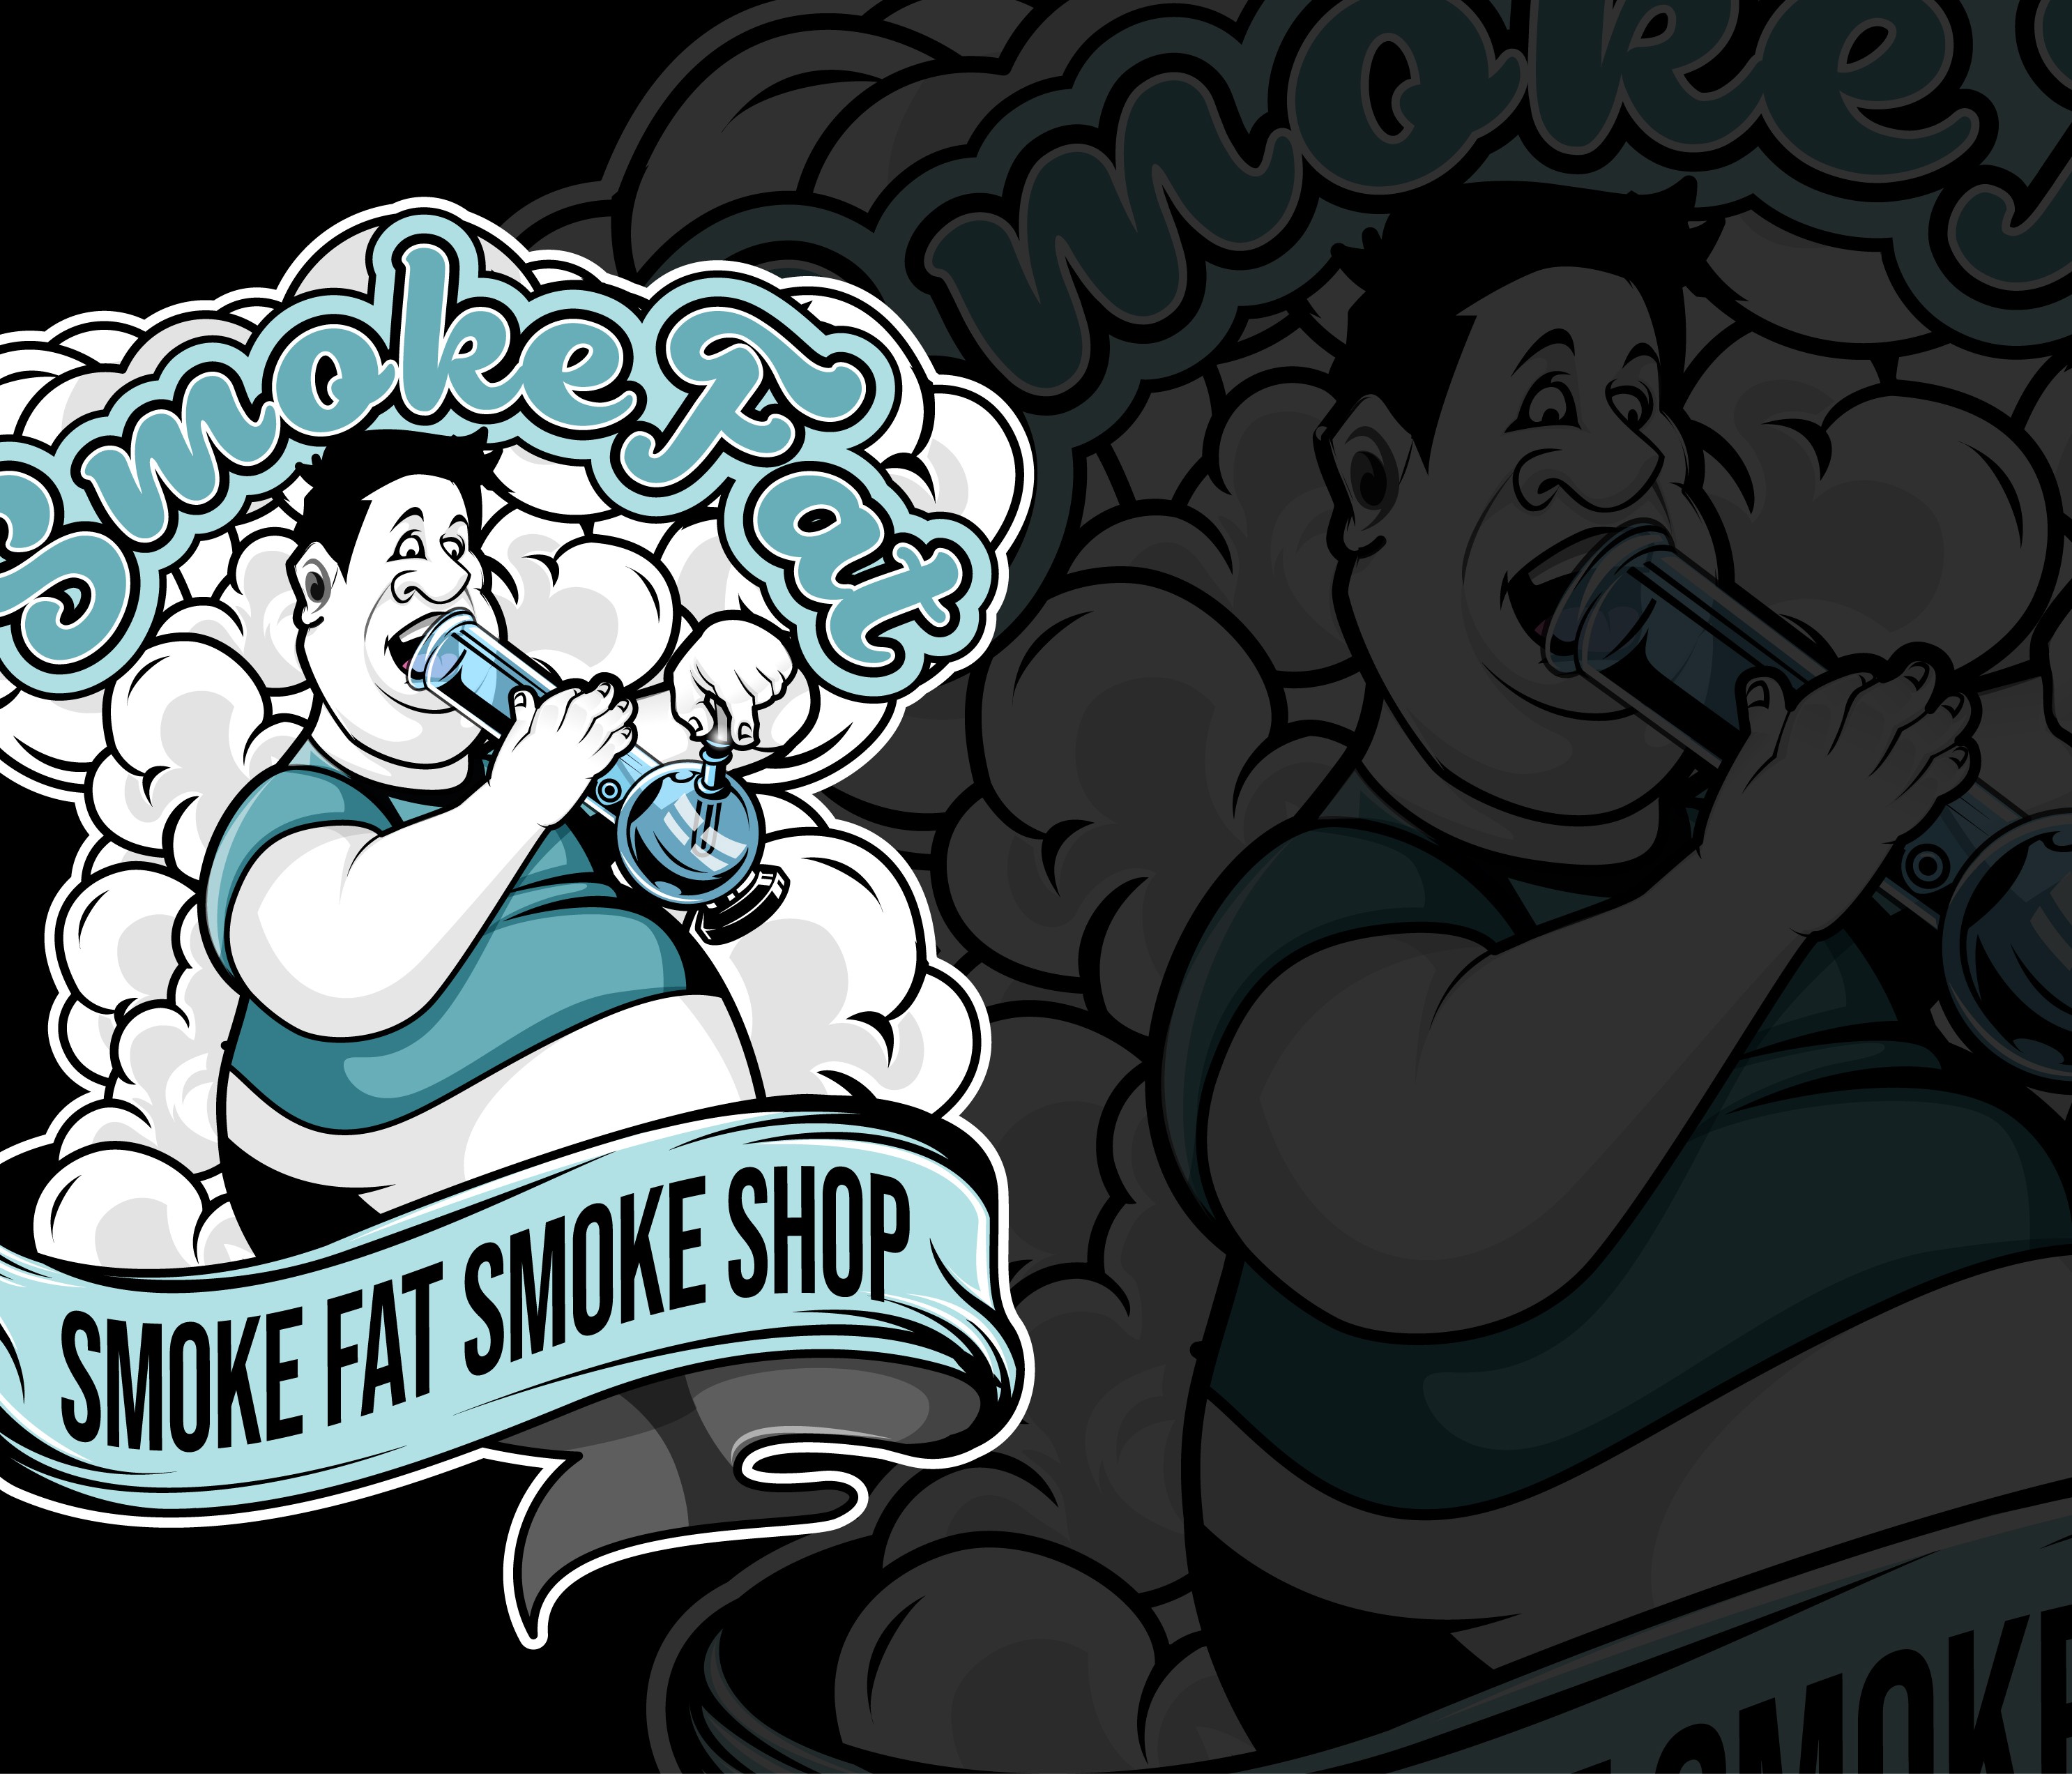 486029722544268-smoke-fat-logo.jpg